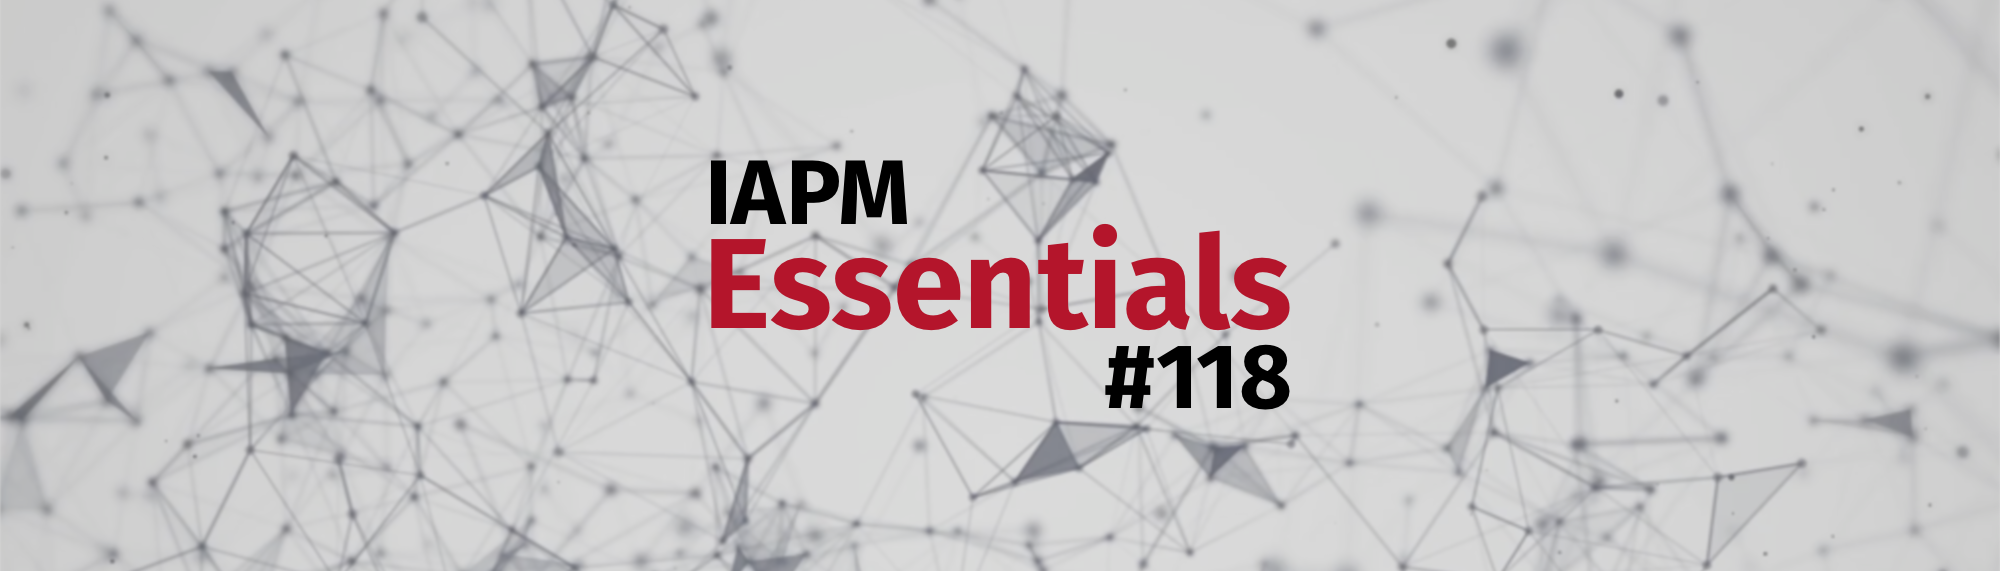 IAPM Essentials #118 - PM Neuigkeiten | IAPM